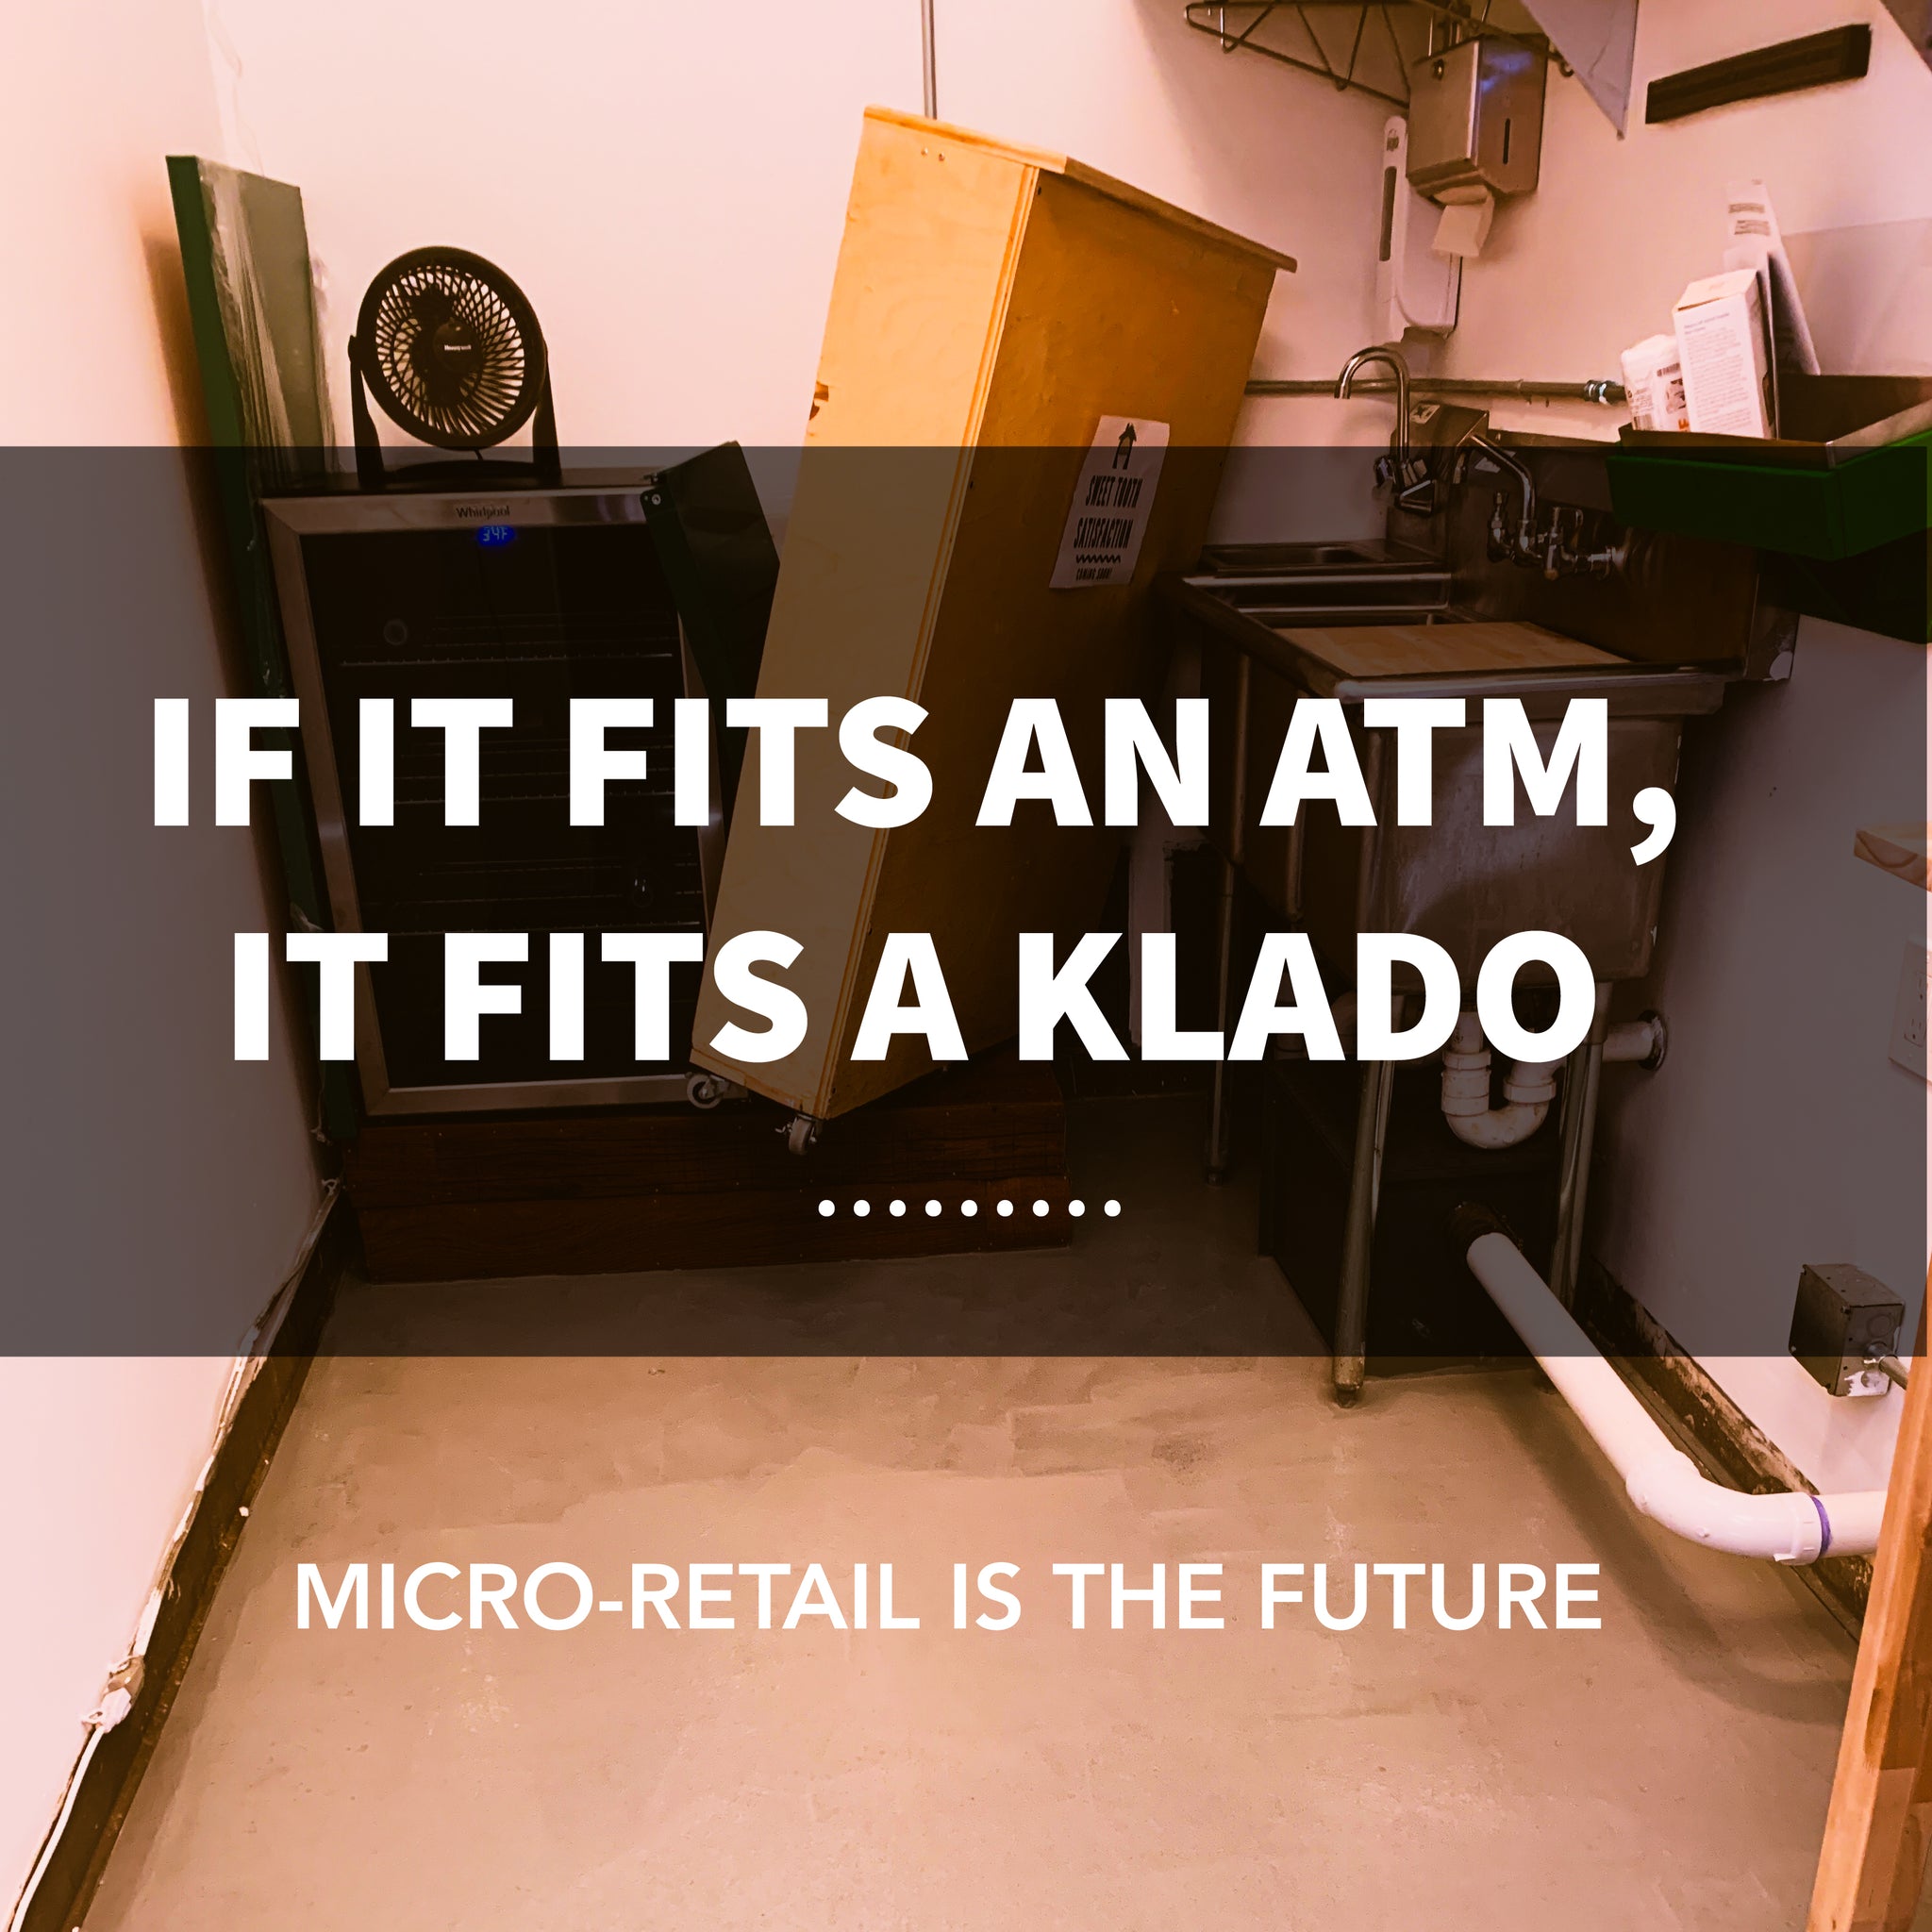 Klado and the Future of Micro-Retail